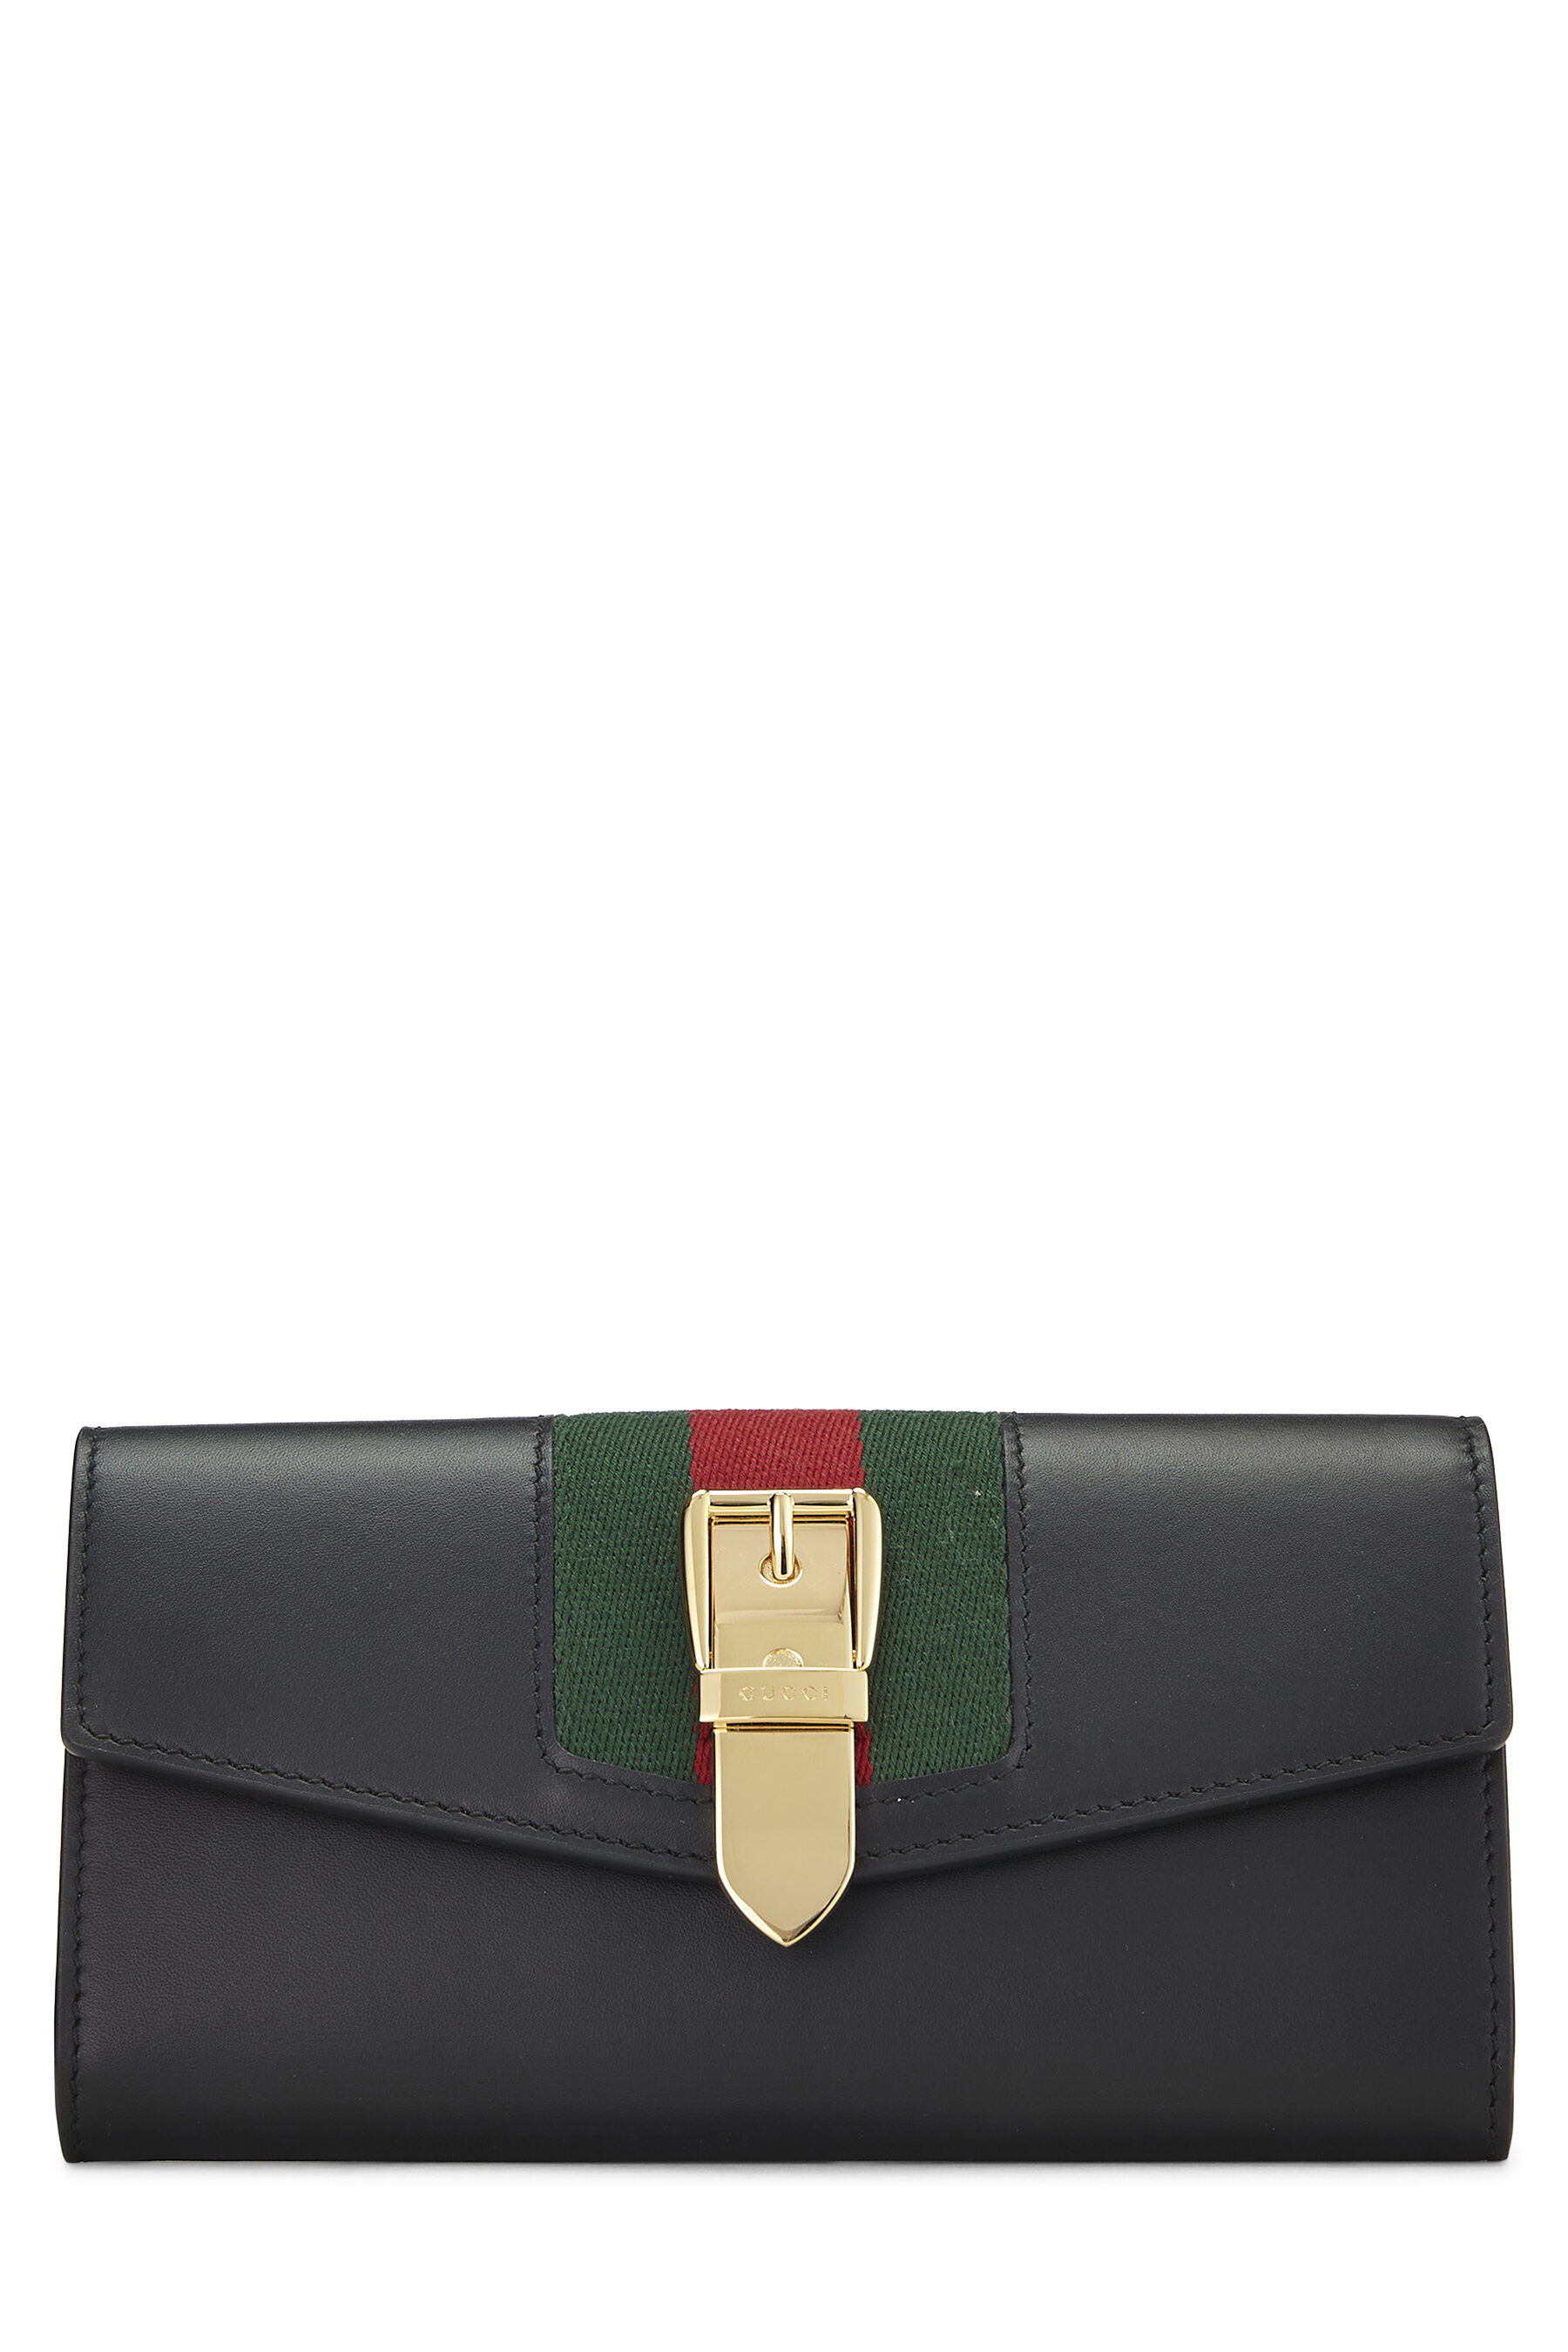 Gucci Black Leather Web Sylvie Continental Wallet